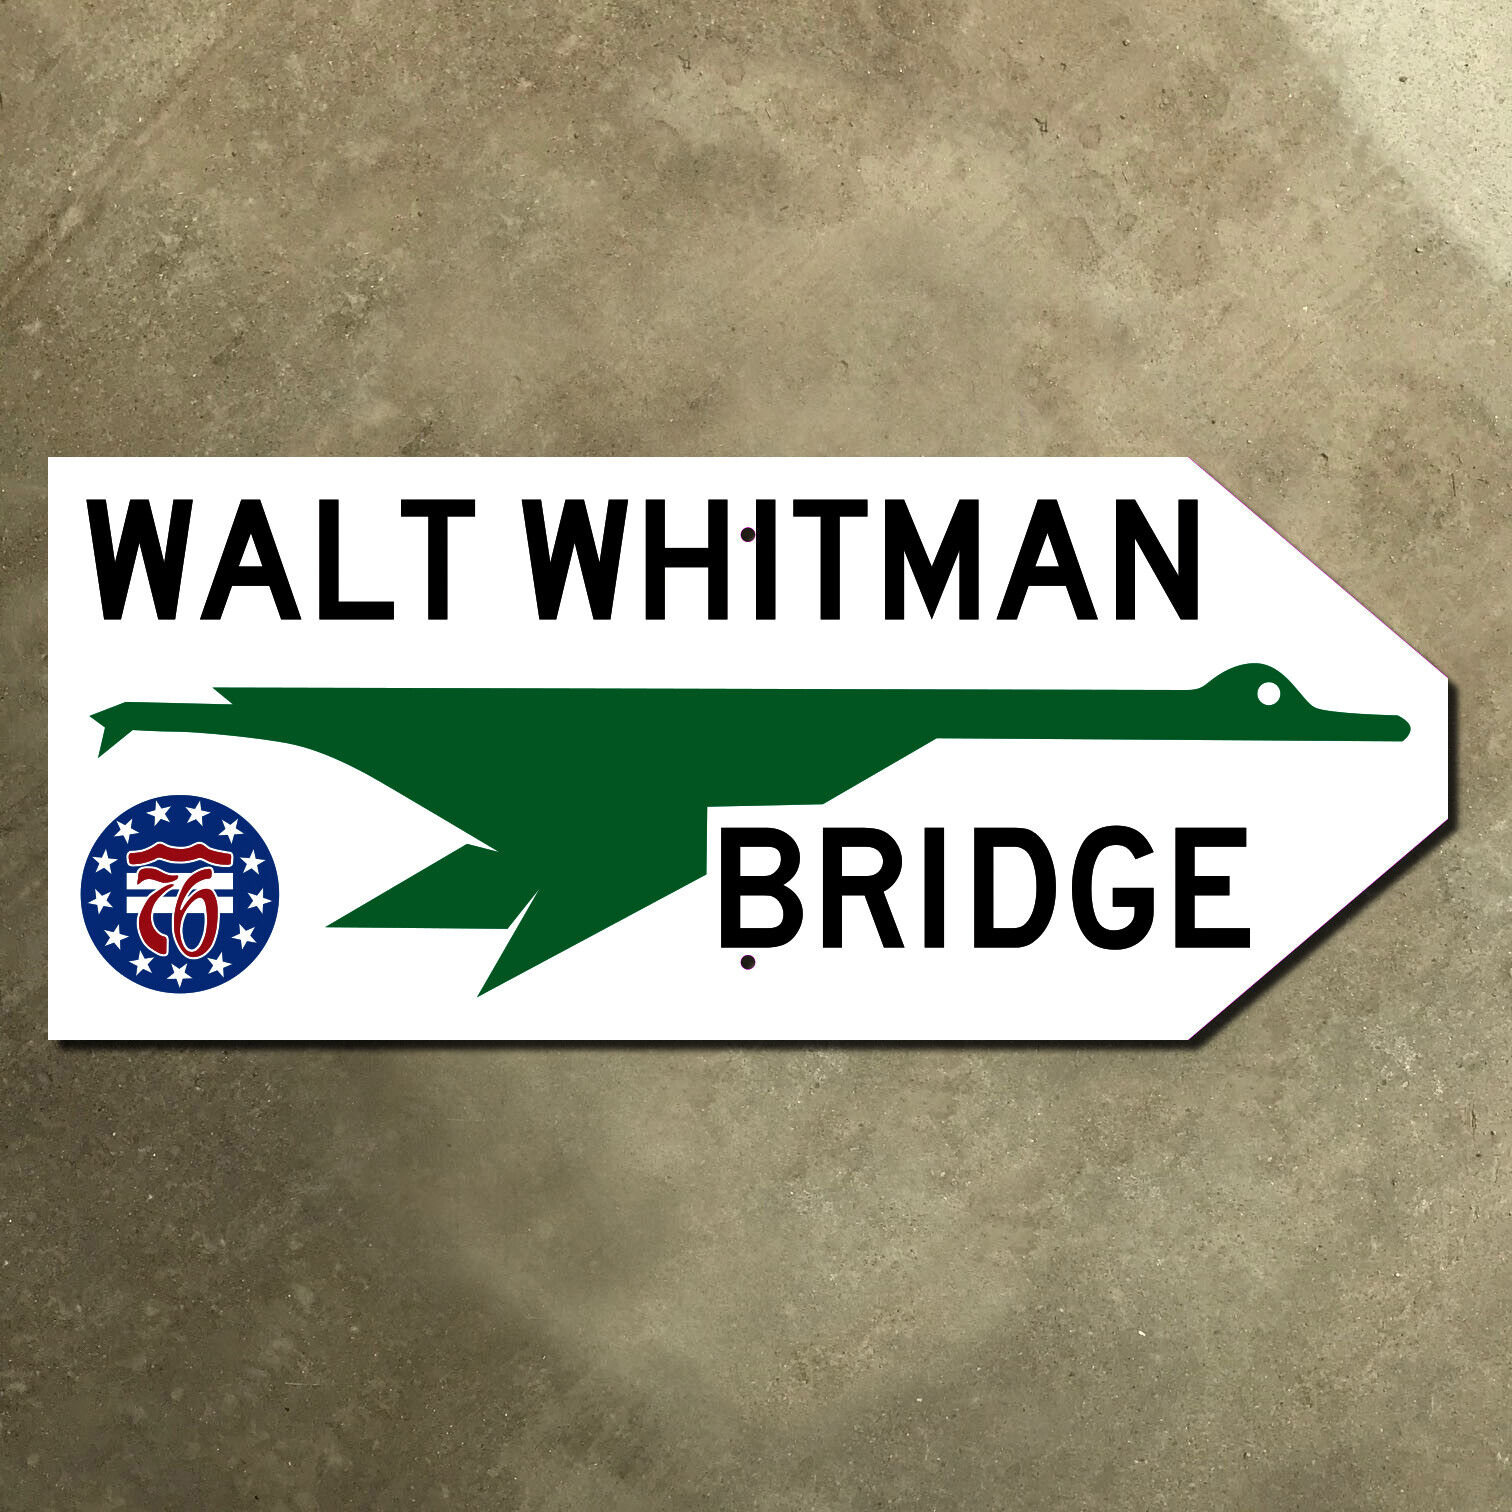 Pennsylvania Walt Whitman Bridge Philadelphia highway marker road sign 24x10